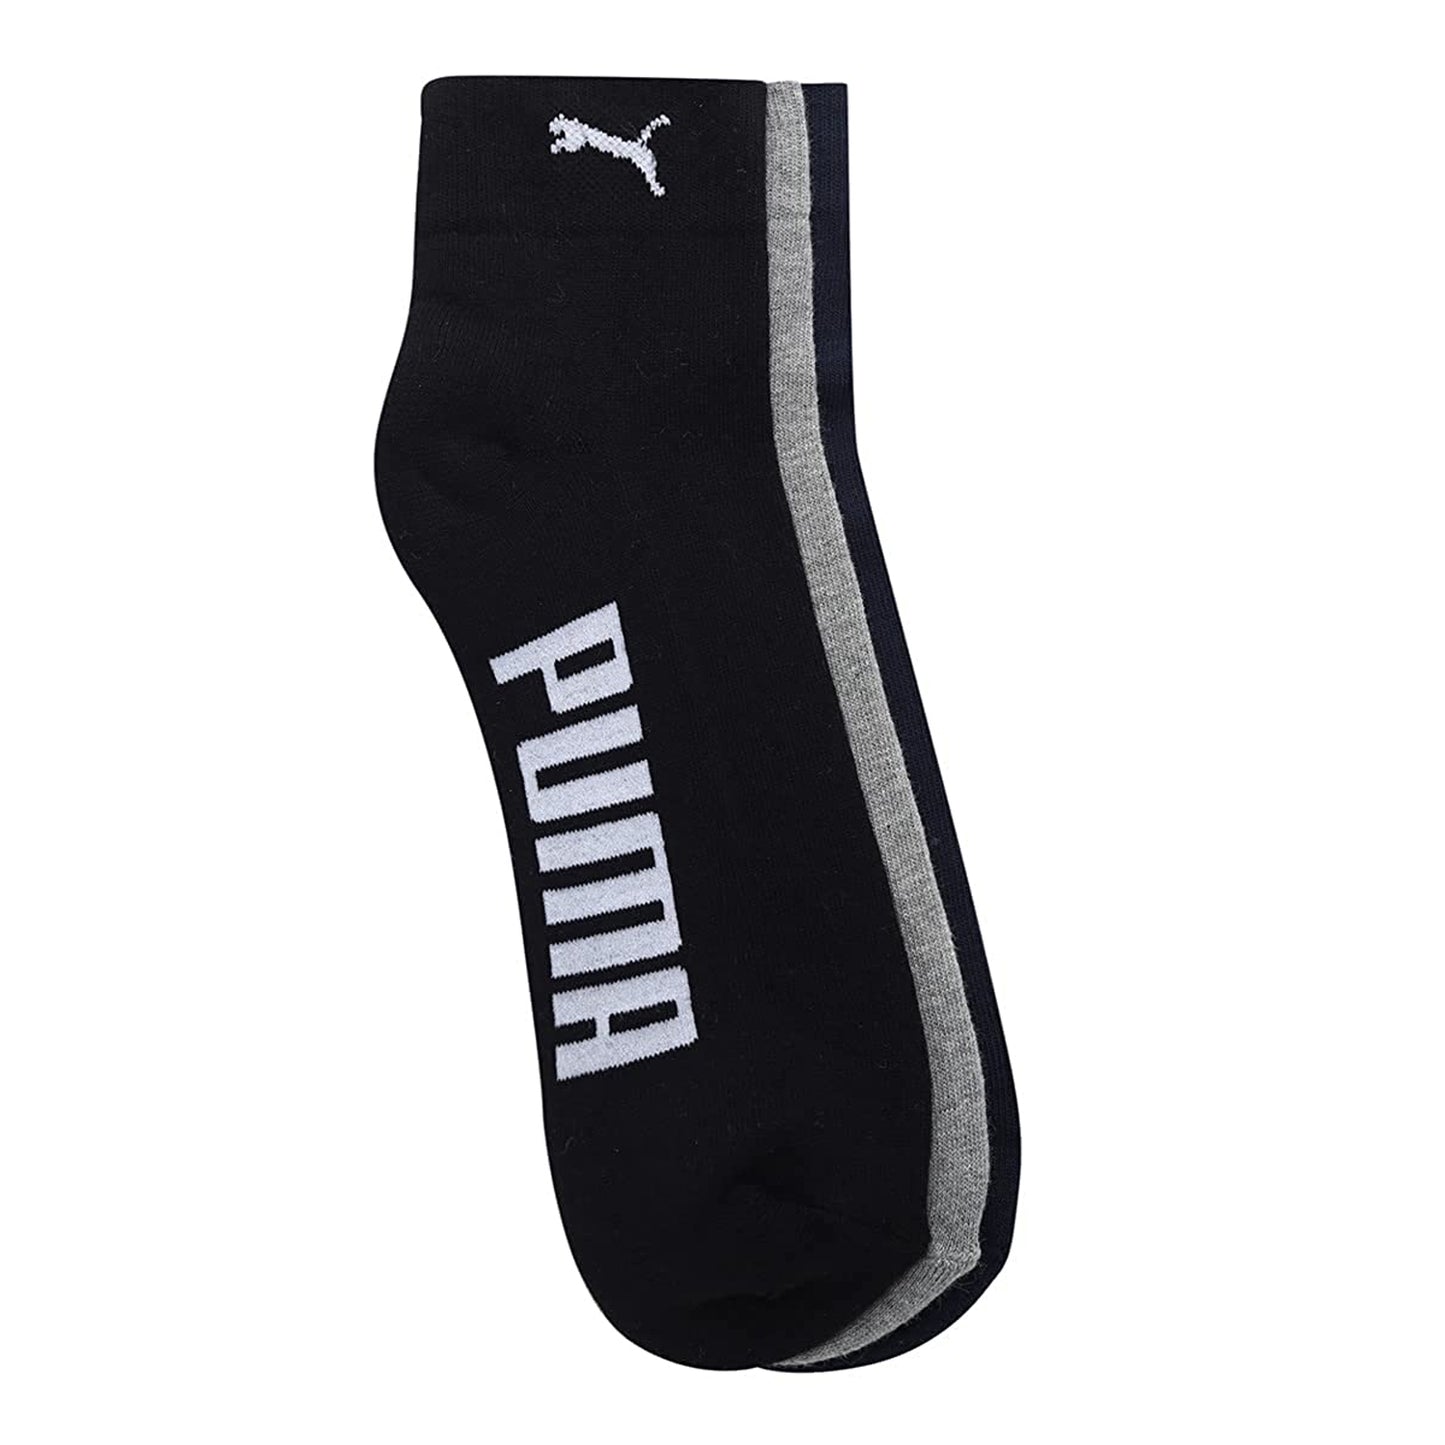 Puma Ankle Length Half Terry Socks, 3 Pairs - Best Price online Prokicksports.com